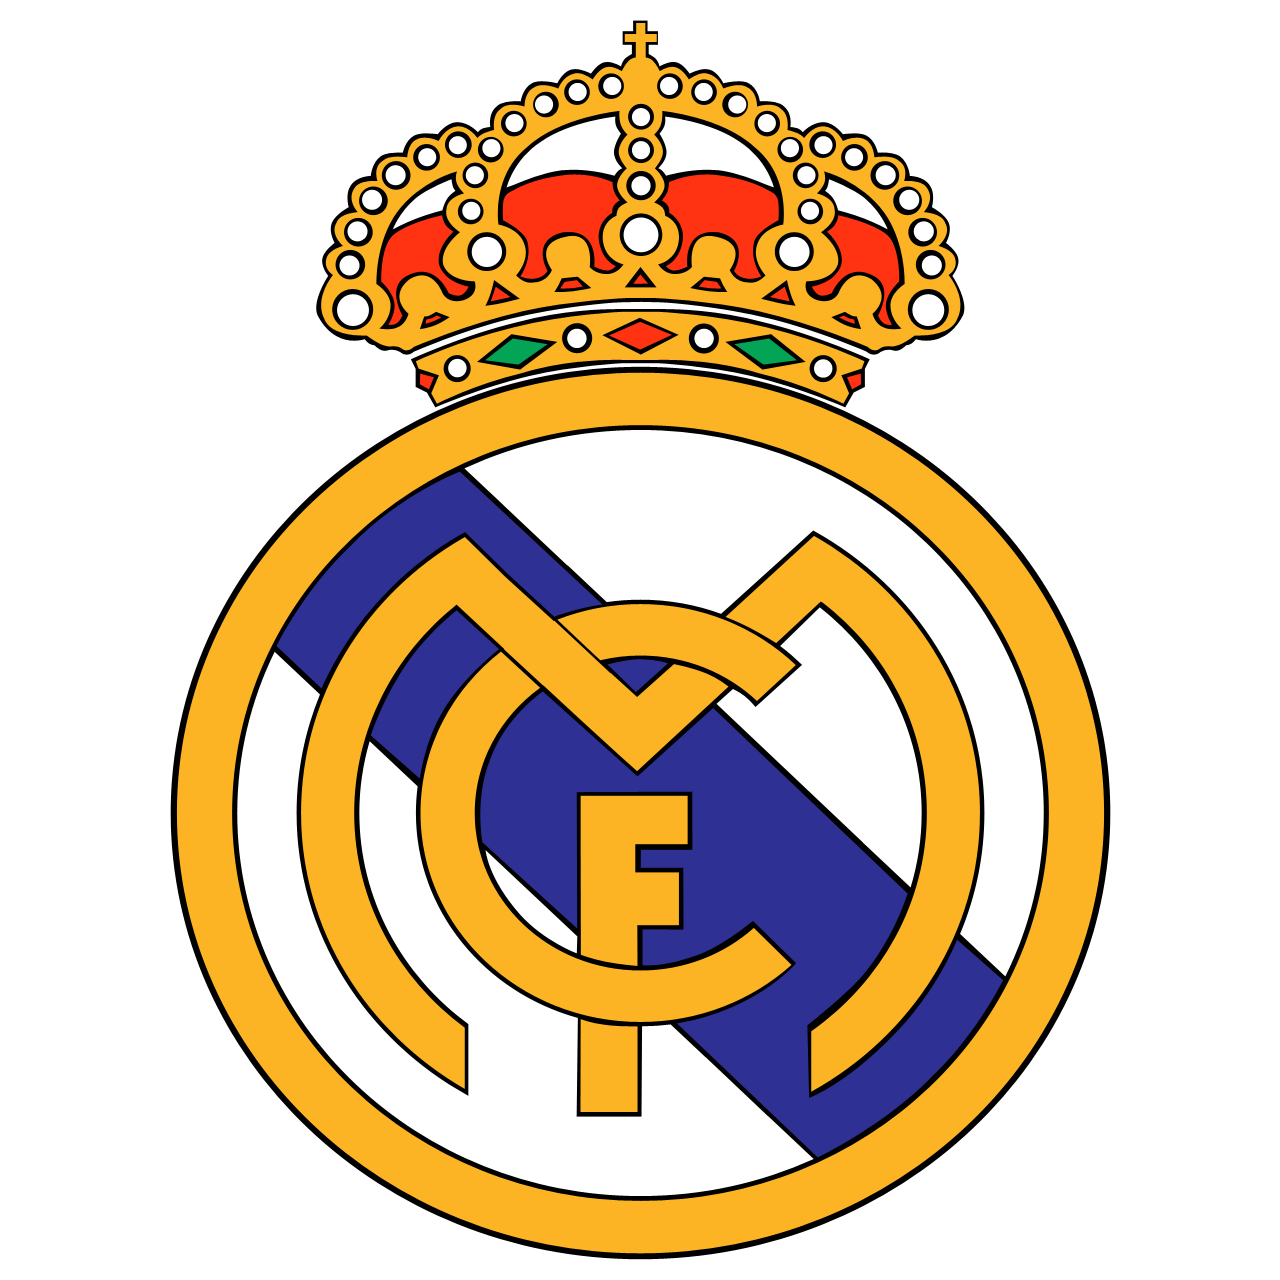 Trending Hari Ini Kumpulan Wallpaper Tema Real Madrid FC HD